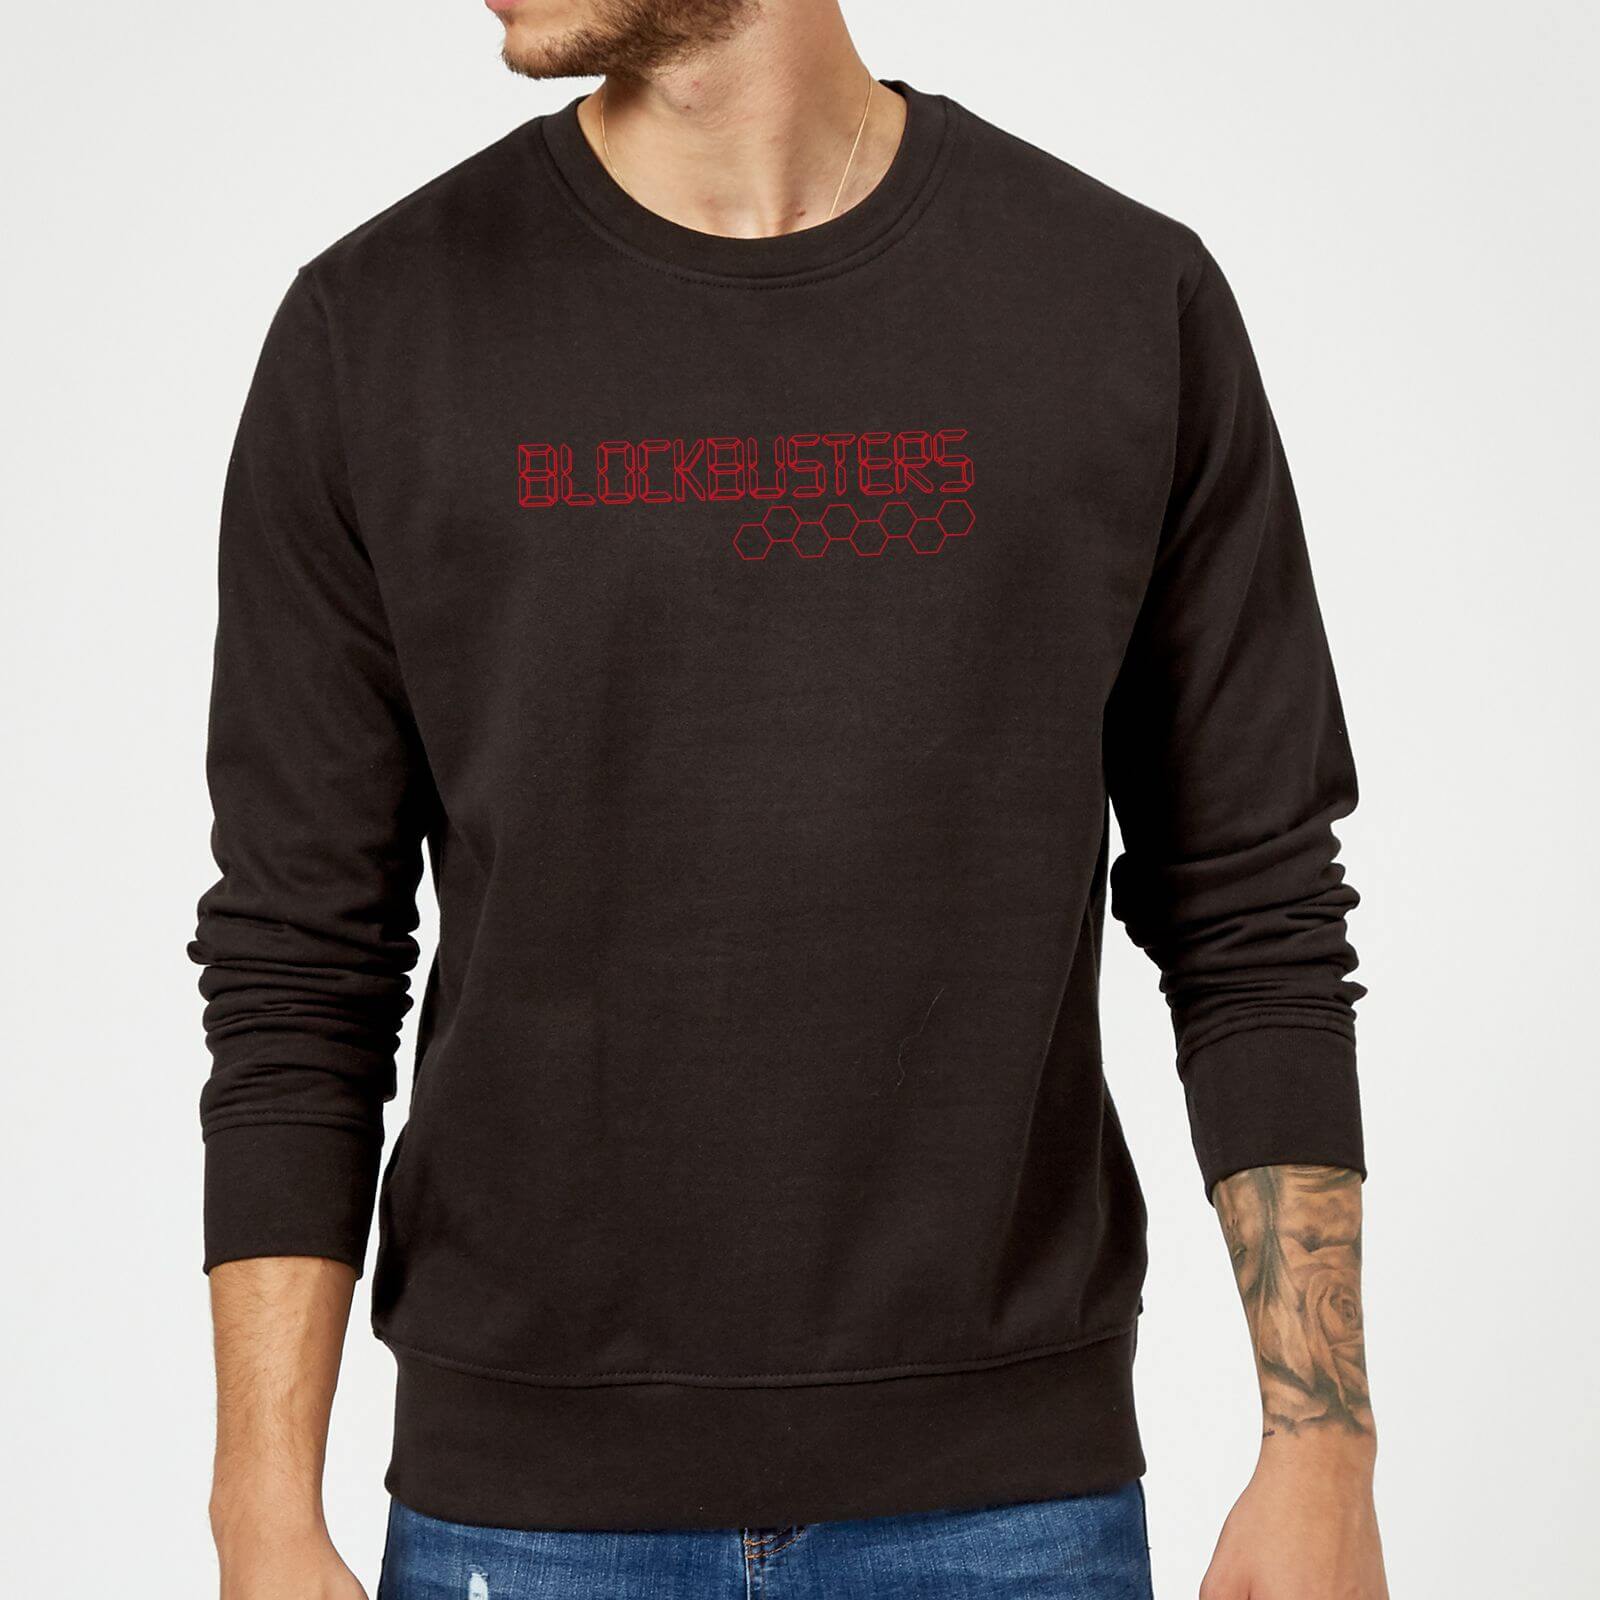 Blockbusters Logo Sweatshirt - Black - S - Black